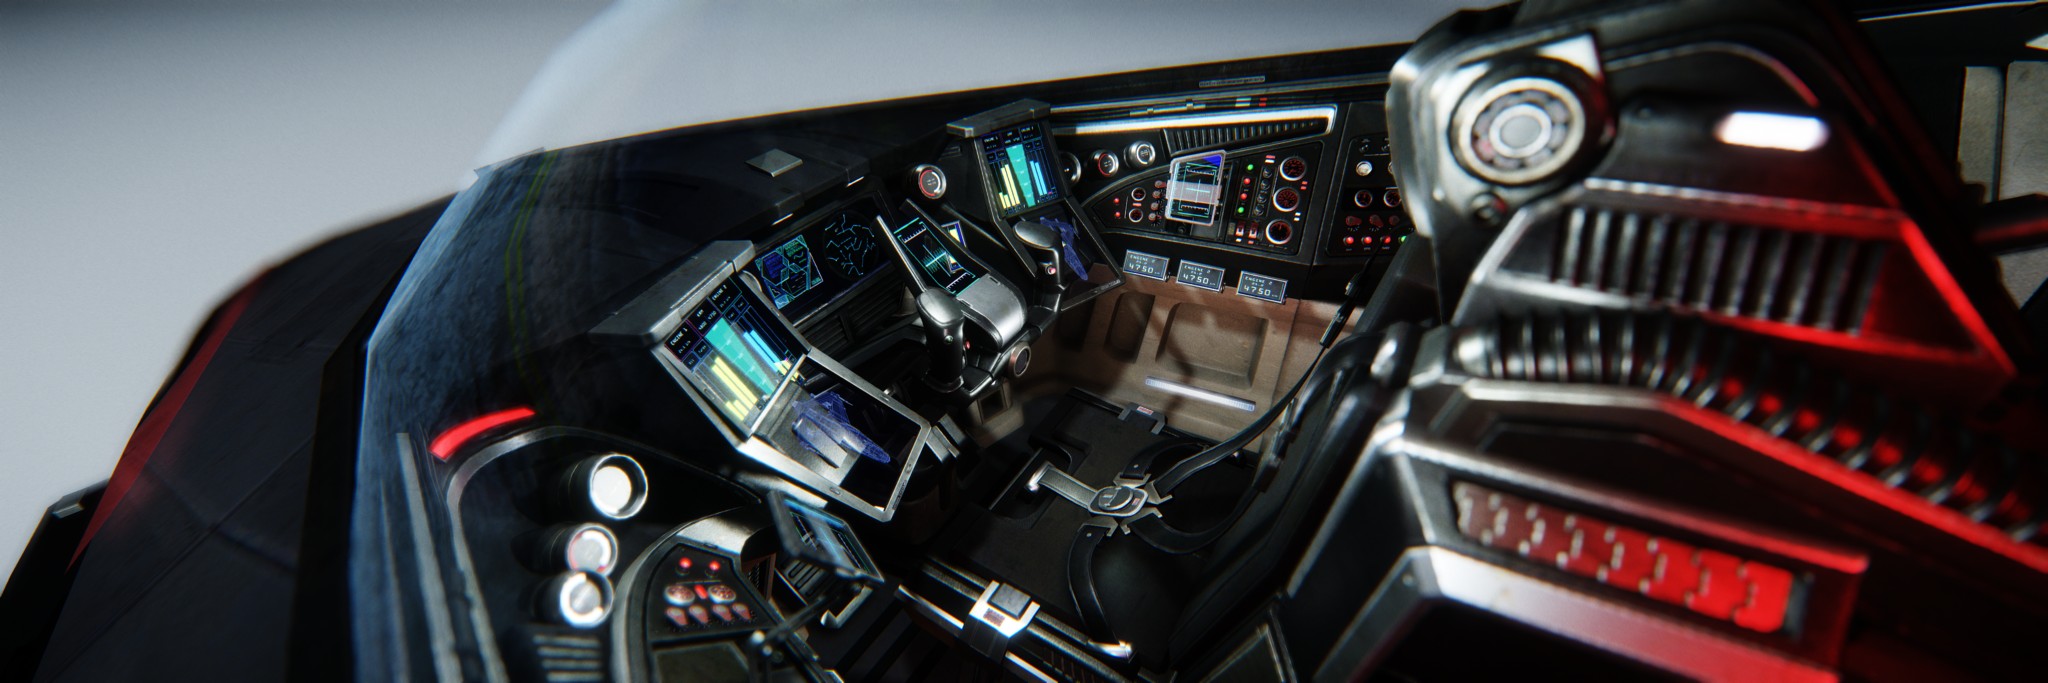 Datei:325a cockpit visual.jpg